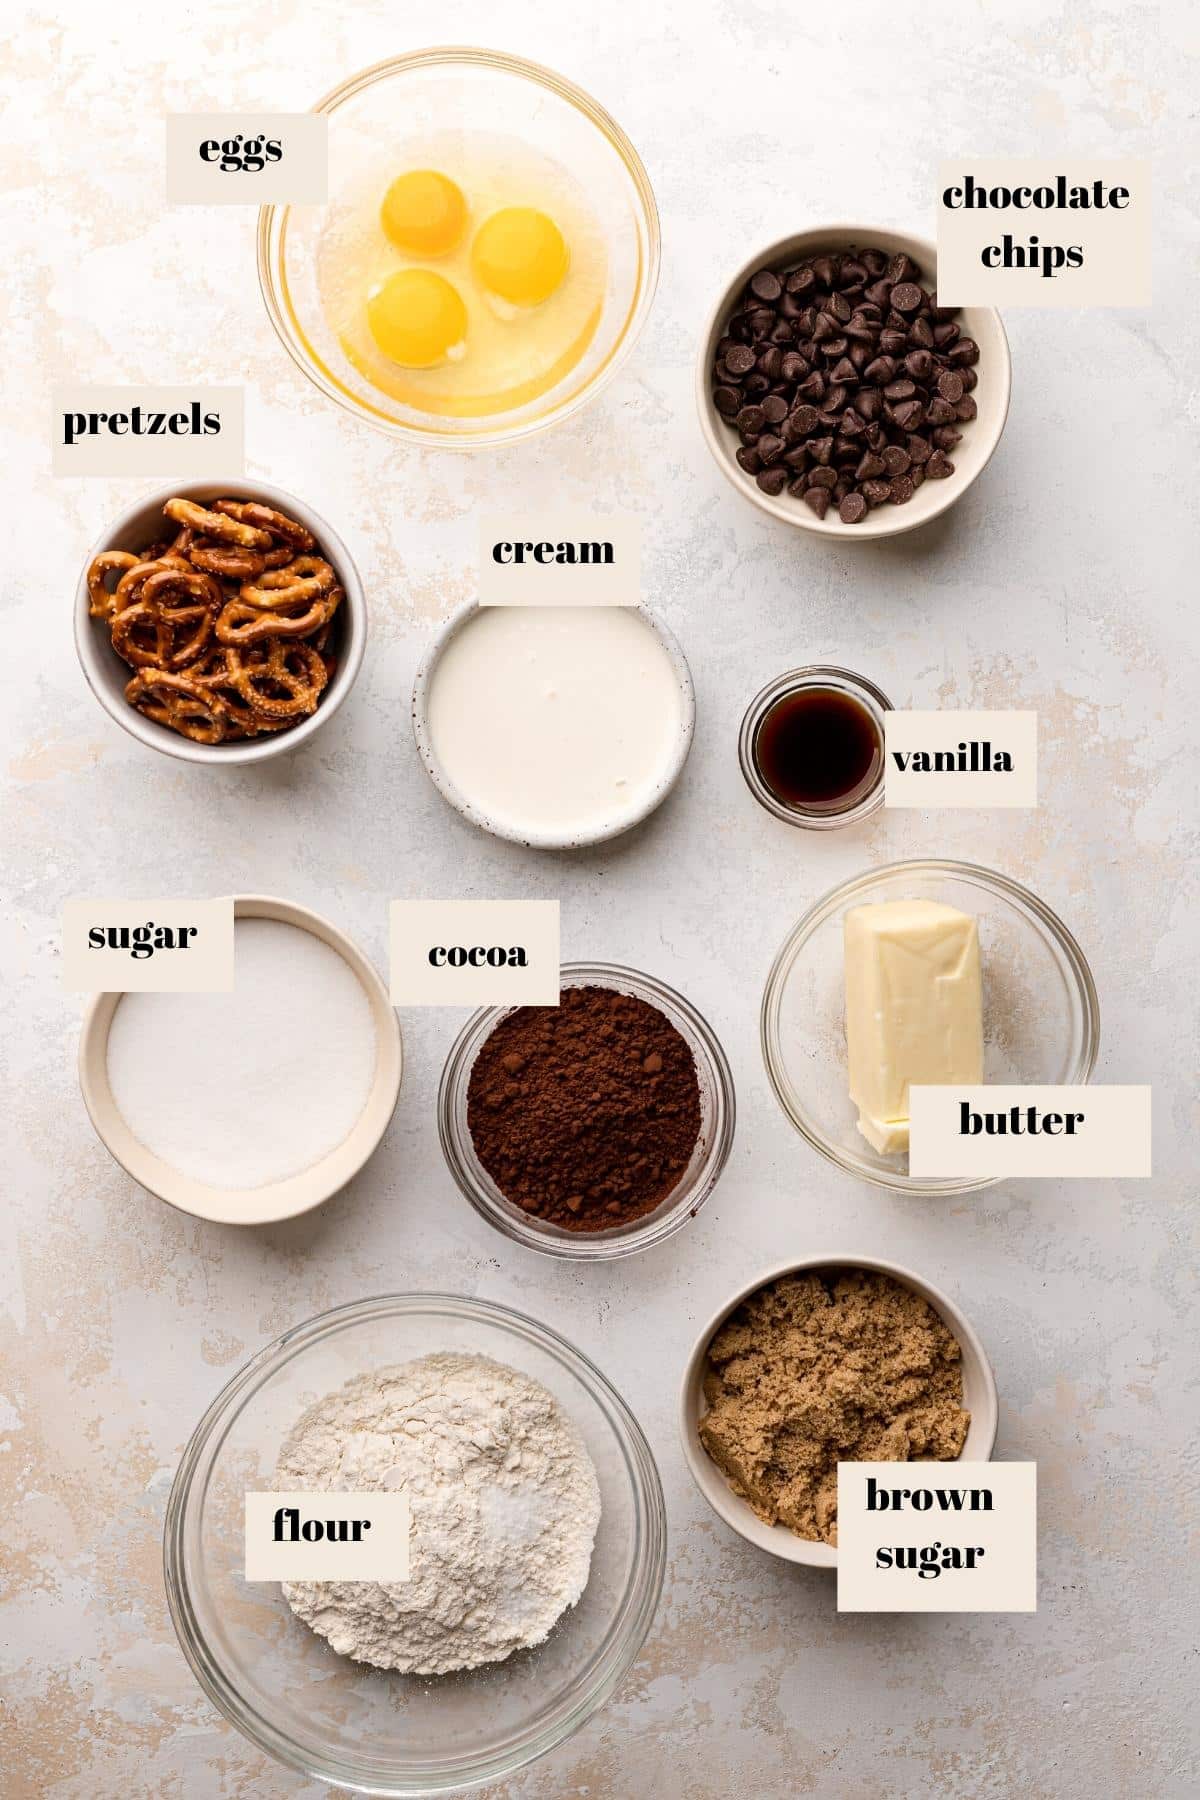 ingredients needed for the pretzel brownies.